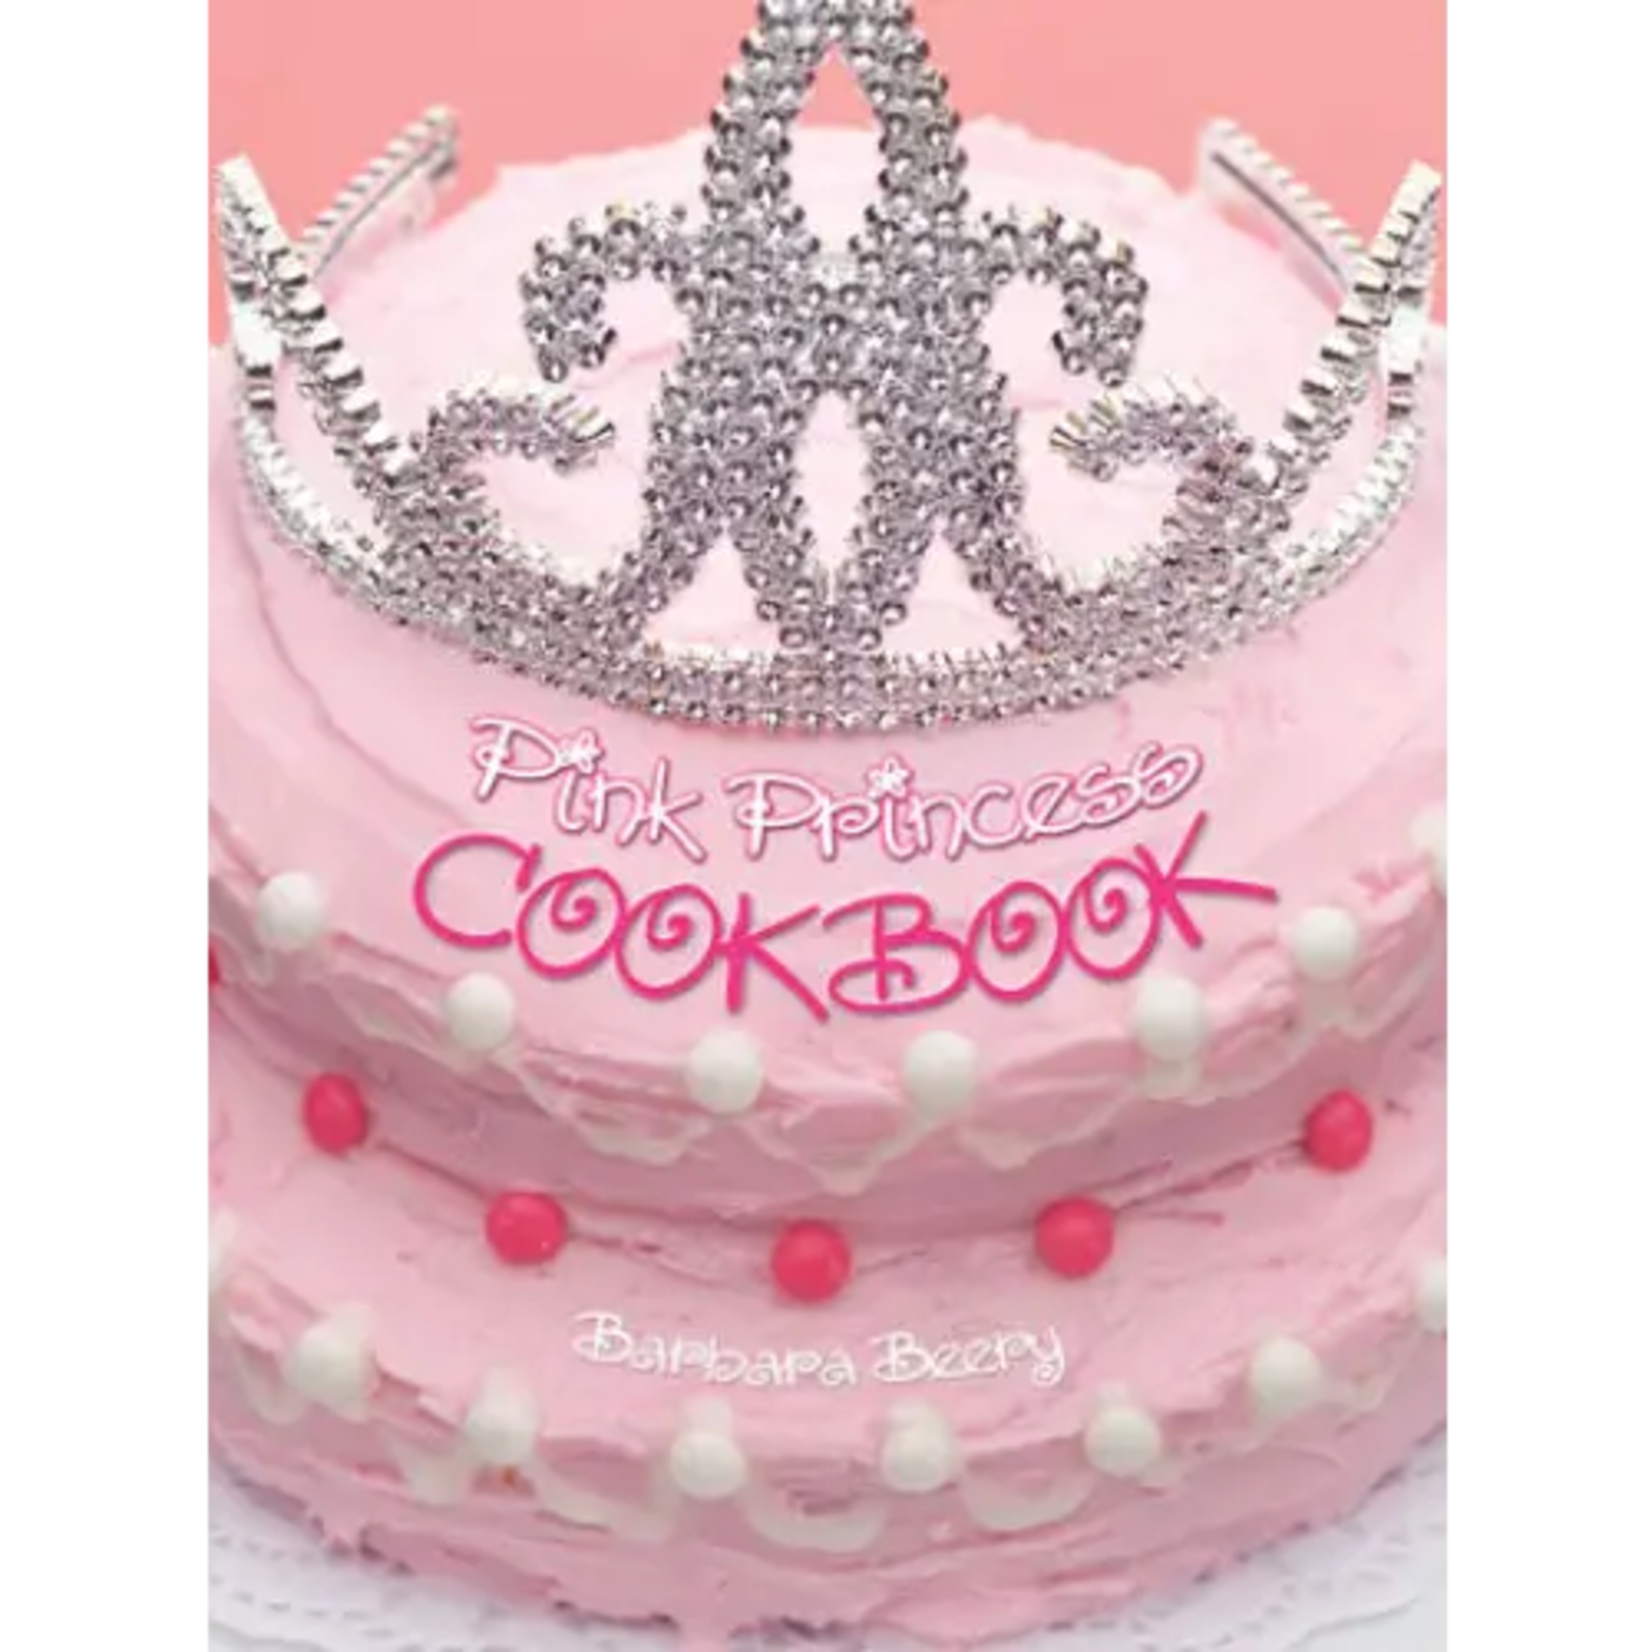 Gibbs Smith Pink Princess Cookbook